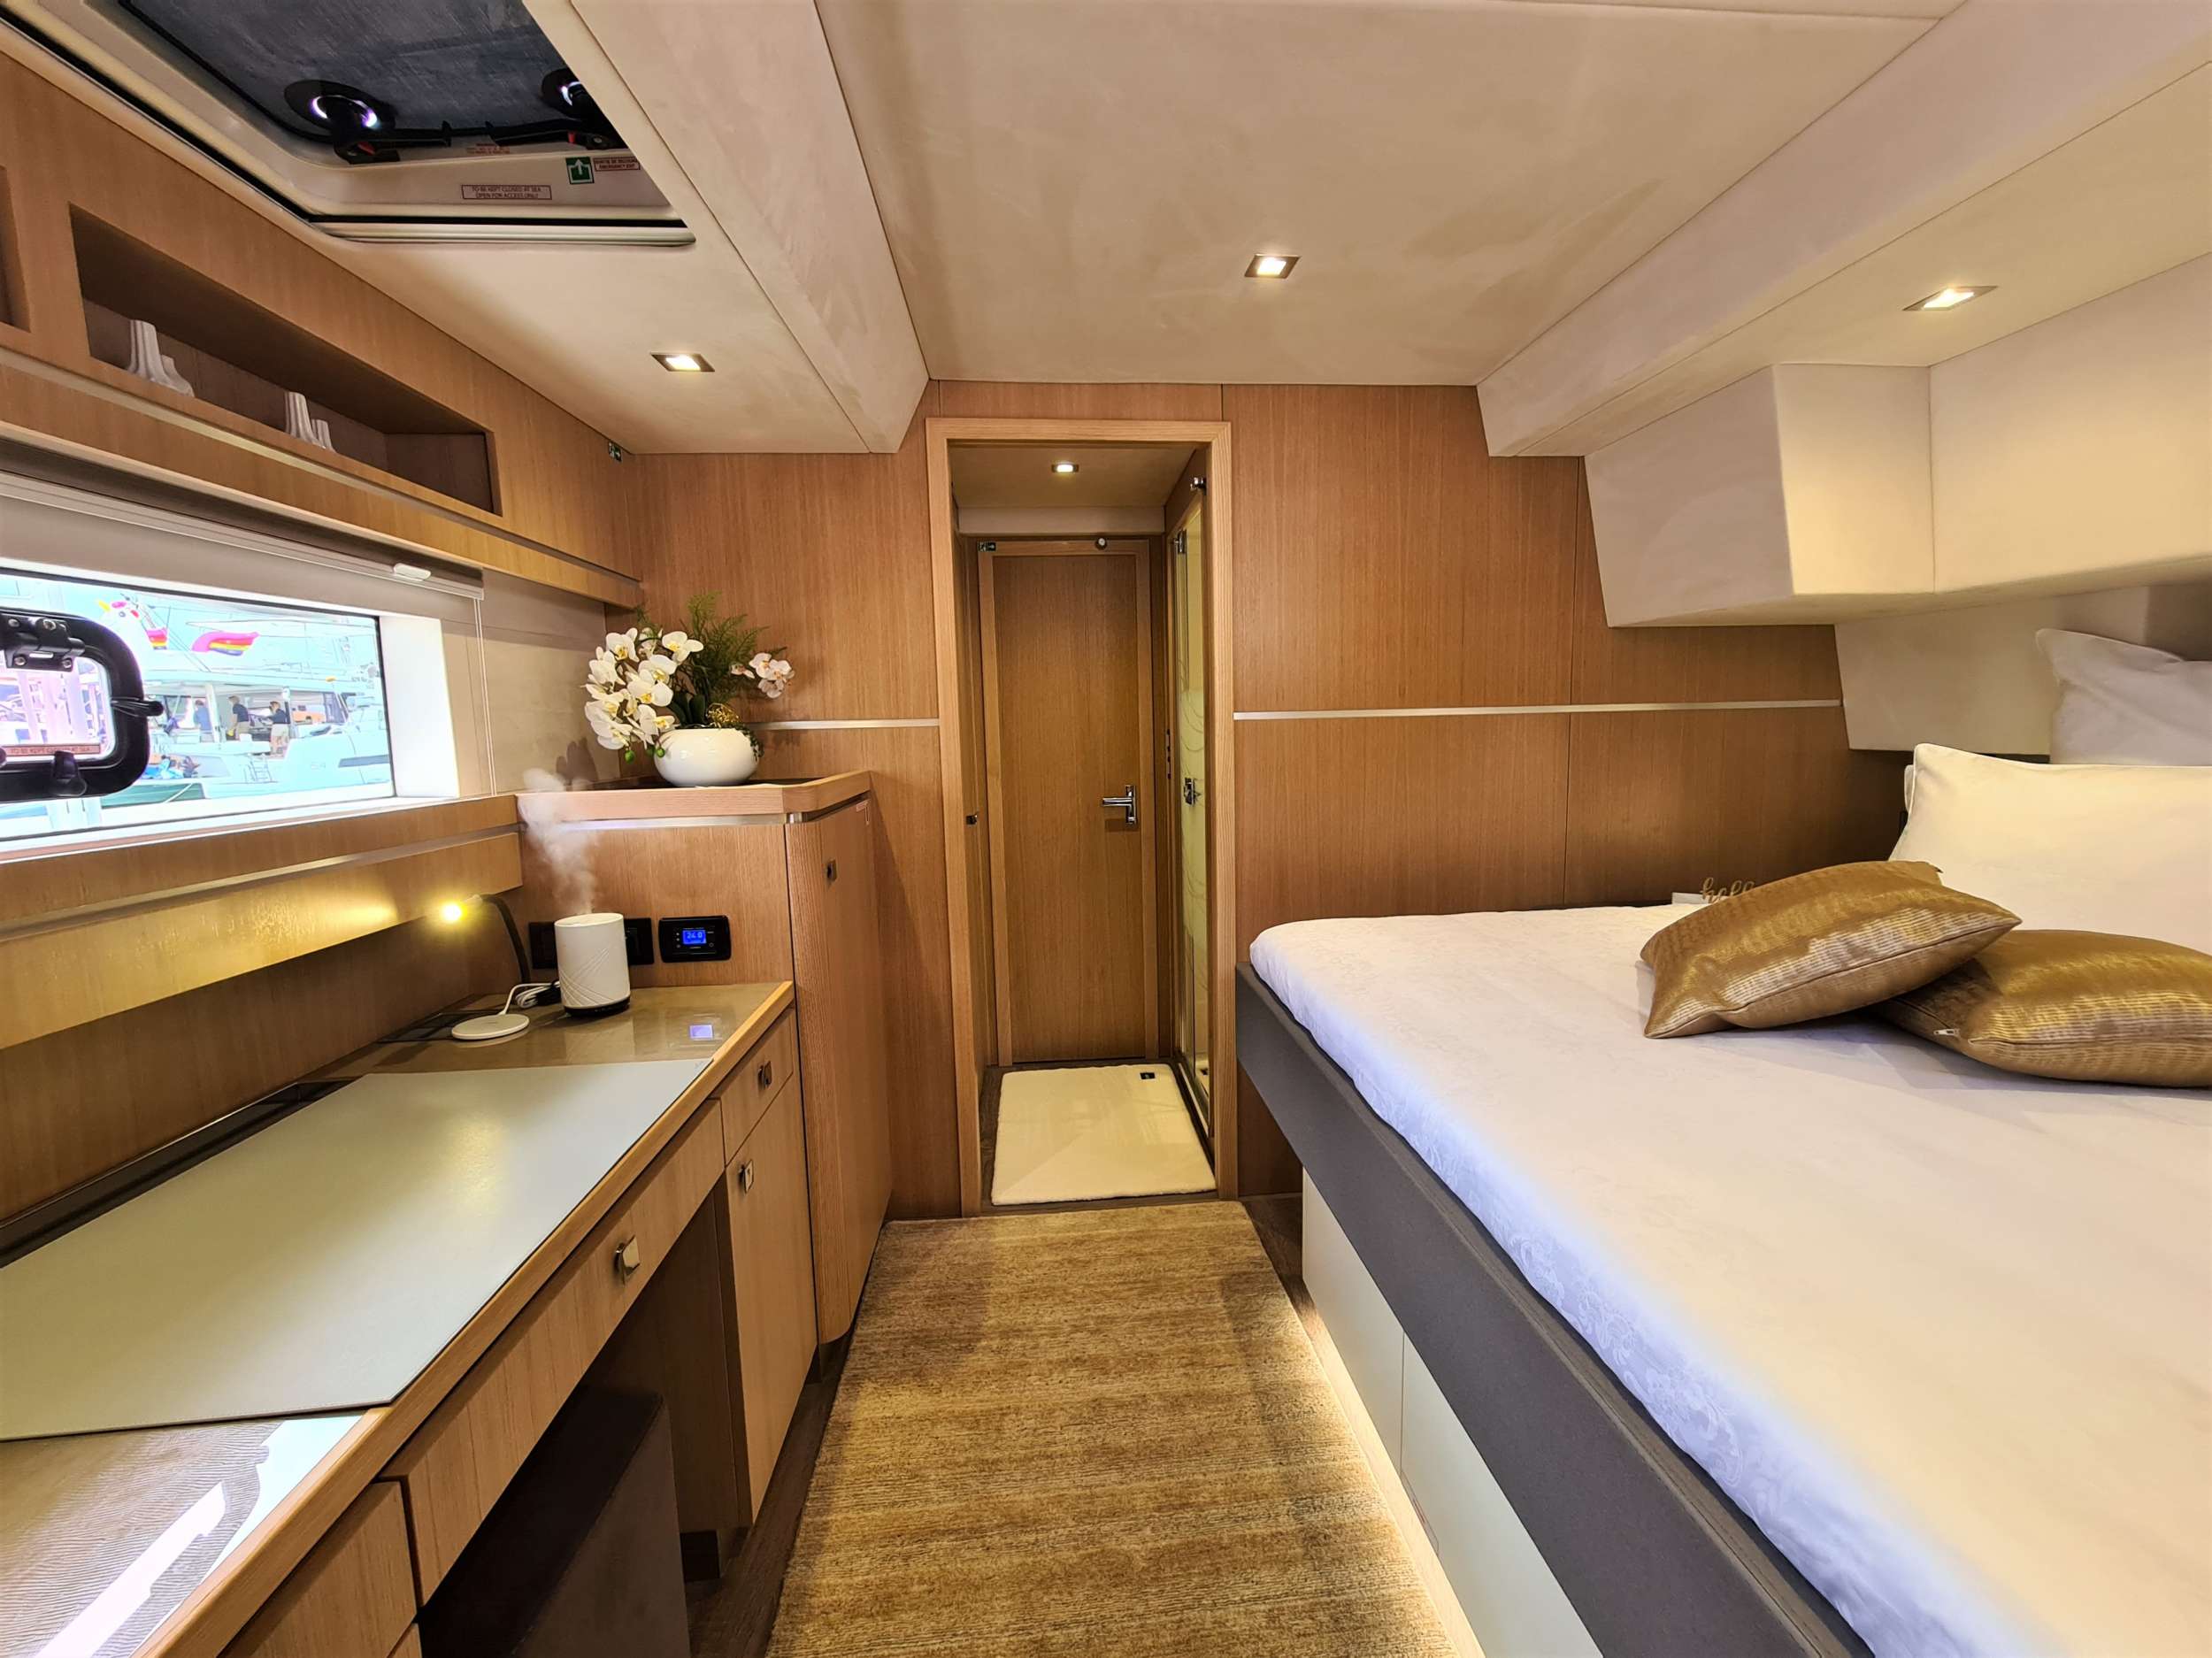 Catamaran Yacht 'ALLURE 64' Guest Cabin, 6 PAX, 3 Crew, 64.00 Ft, 19.00 Meters, Built 2020, Privilege